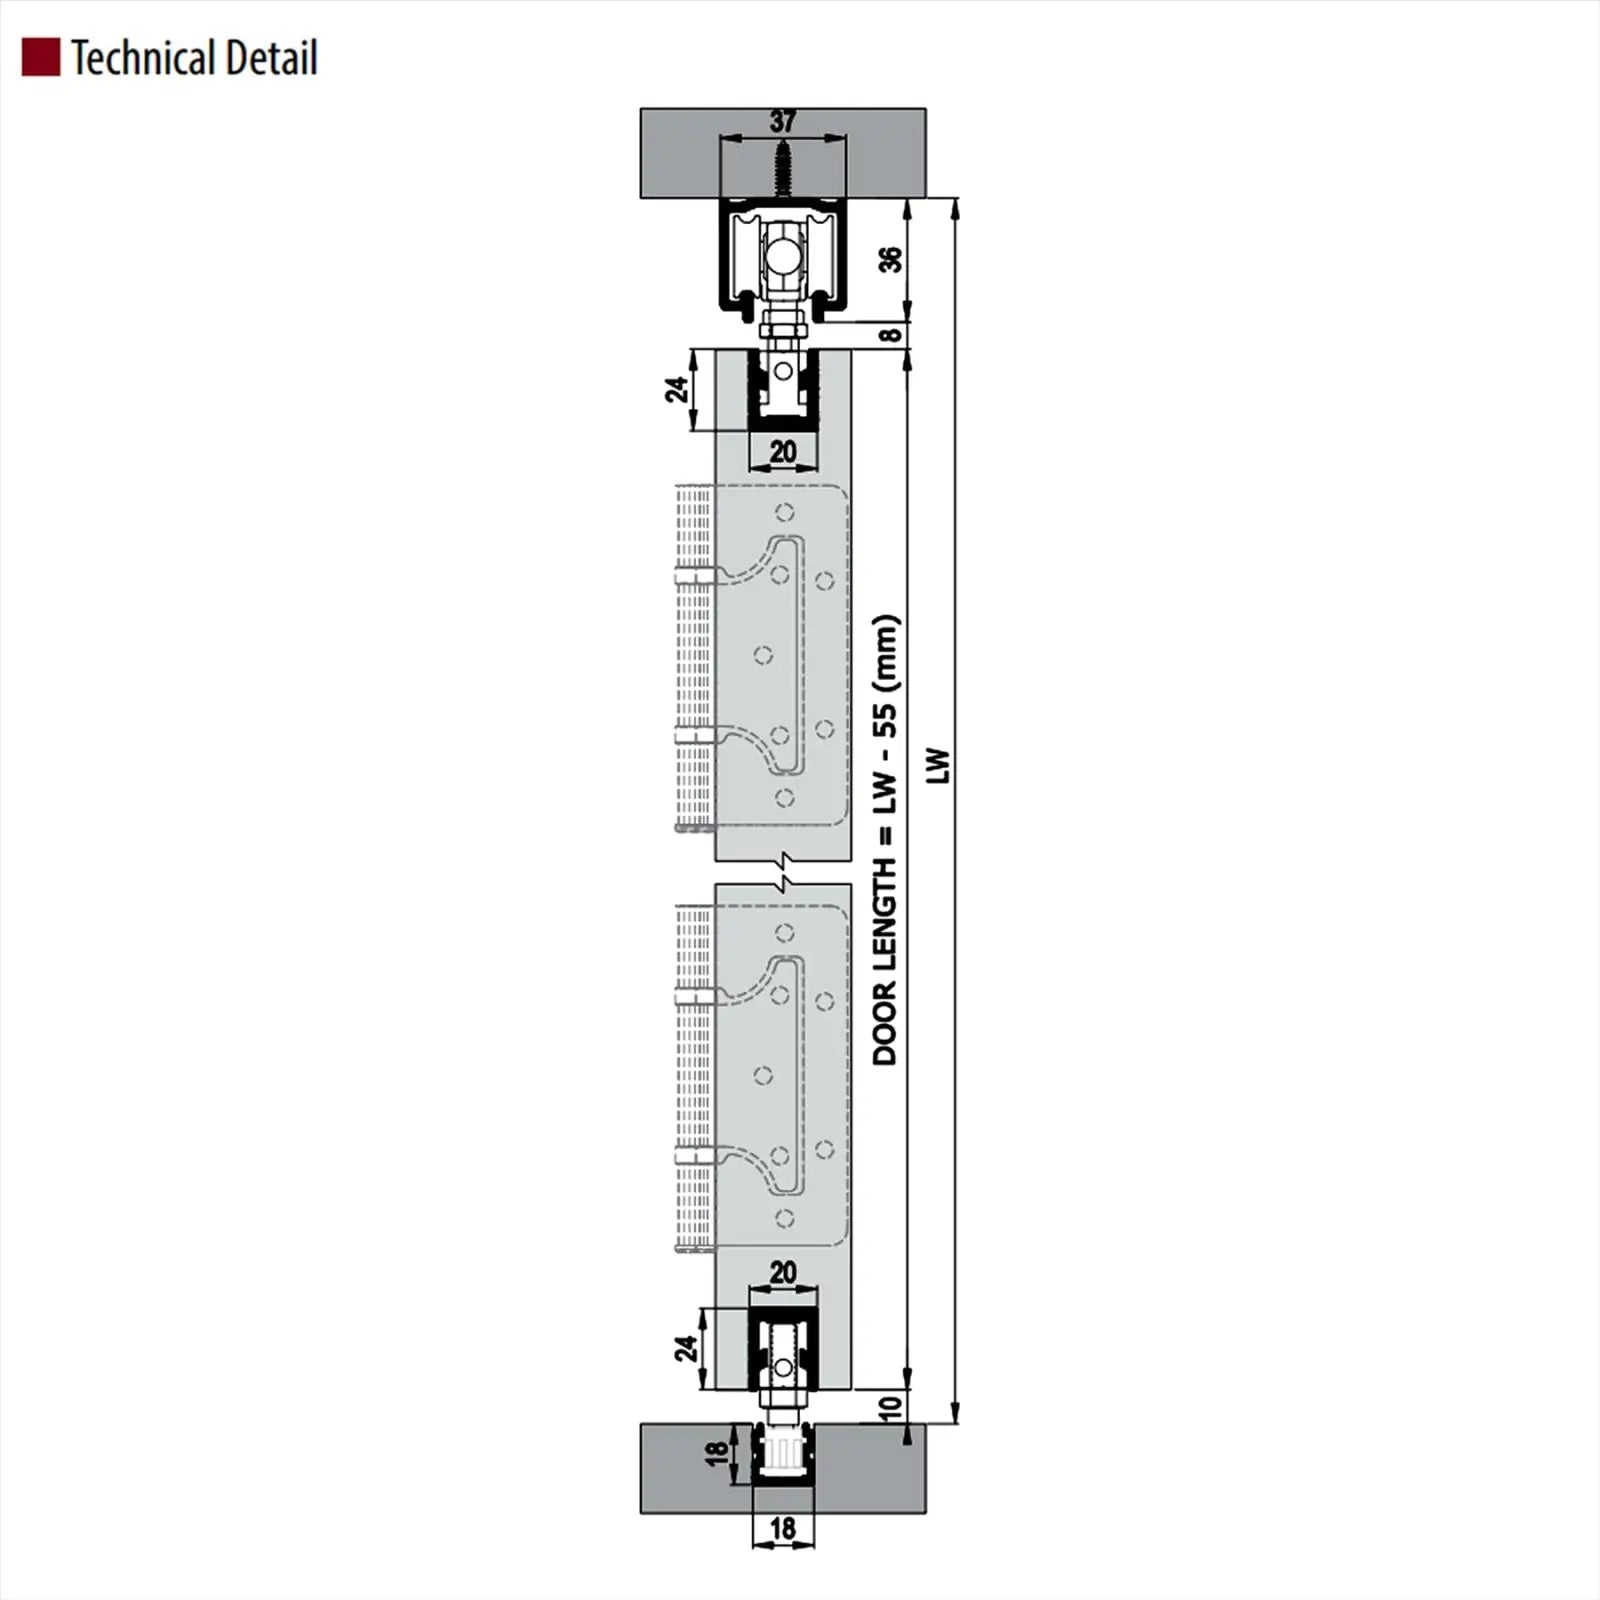 F-Slide Folding Sliding Door Kit - 5 + 0 Door - 4800mm Track - Decor And Decor